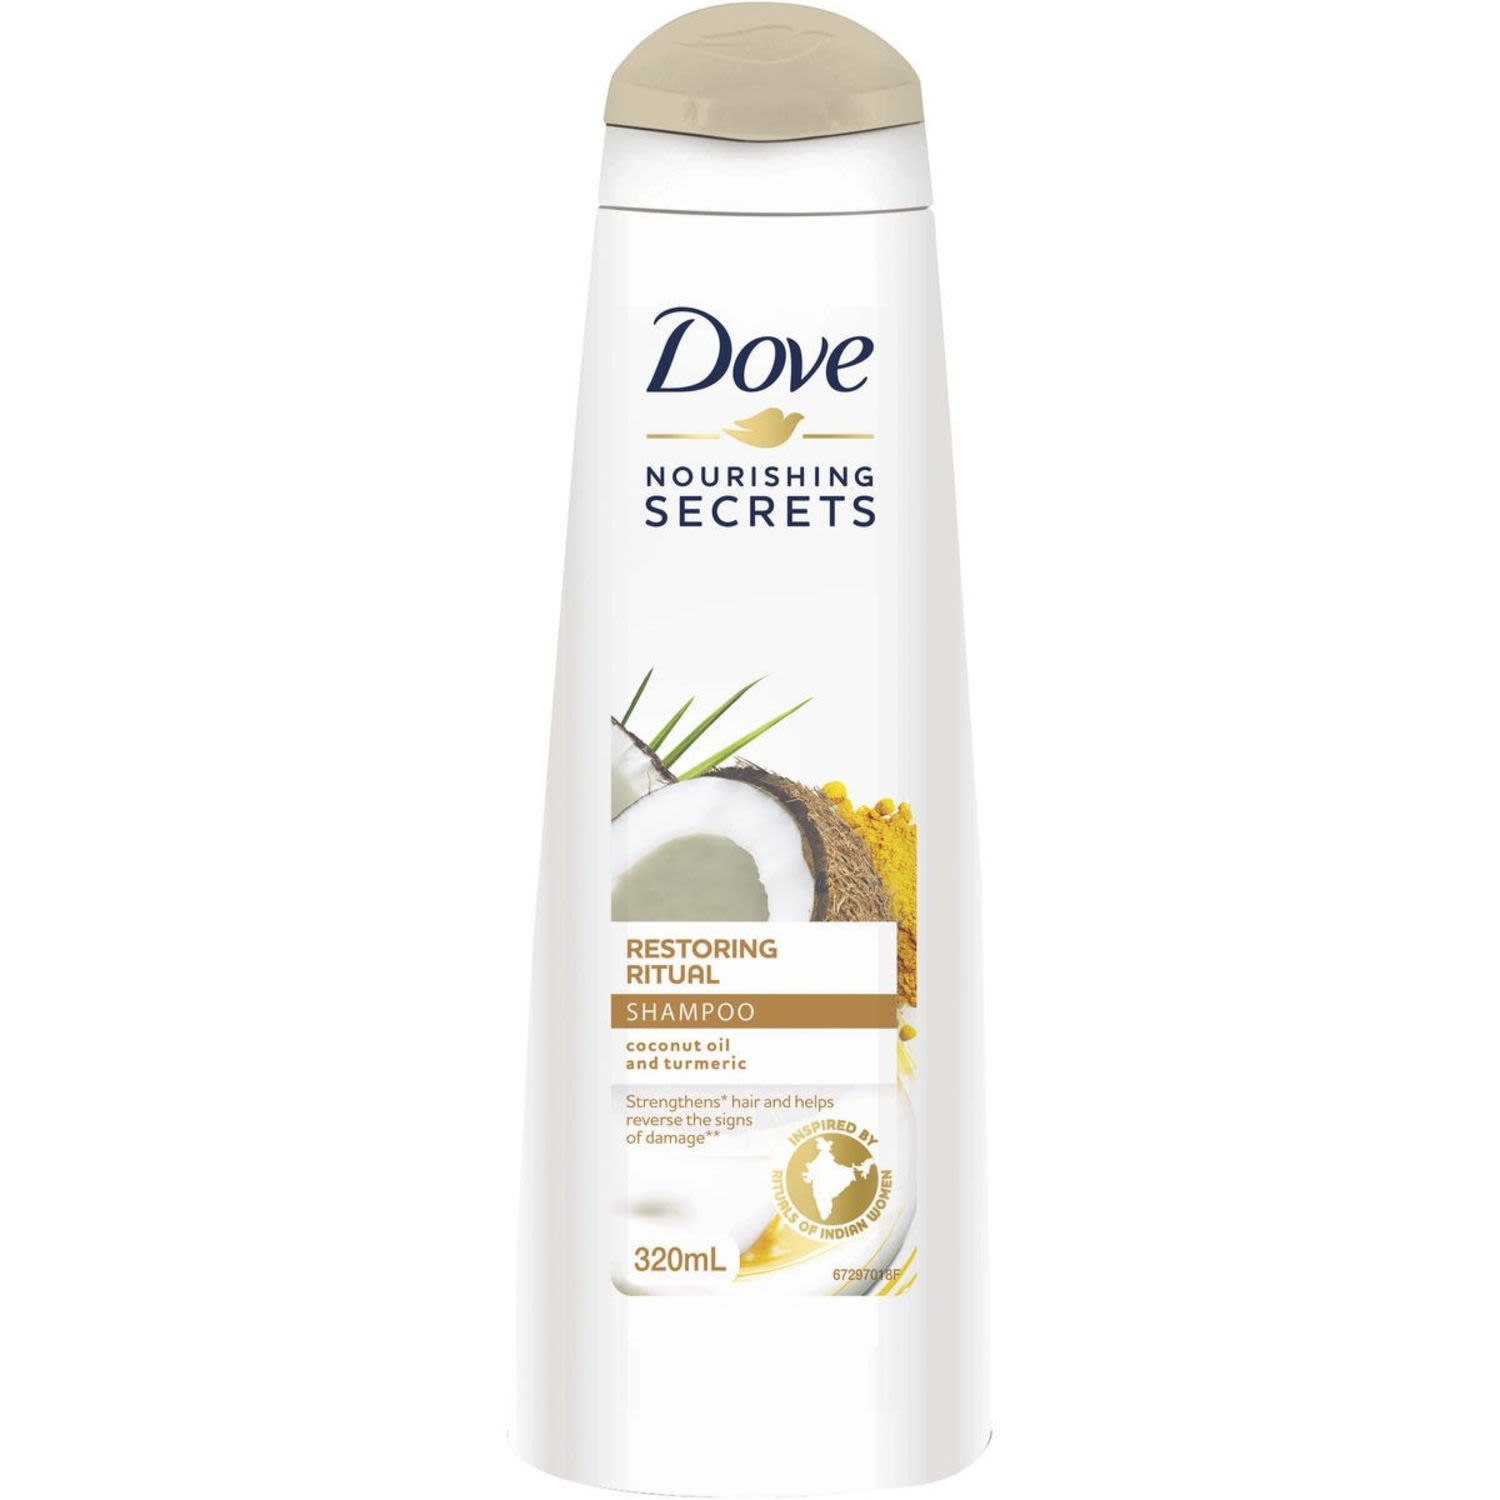 Dove Nourishing Secrets Shampoo Restoring Ritual, 320 Millilitre